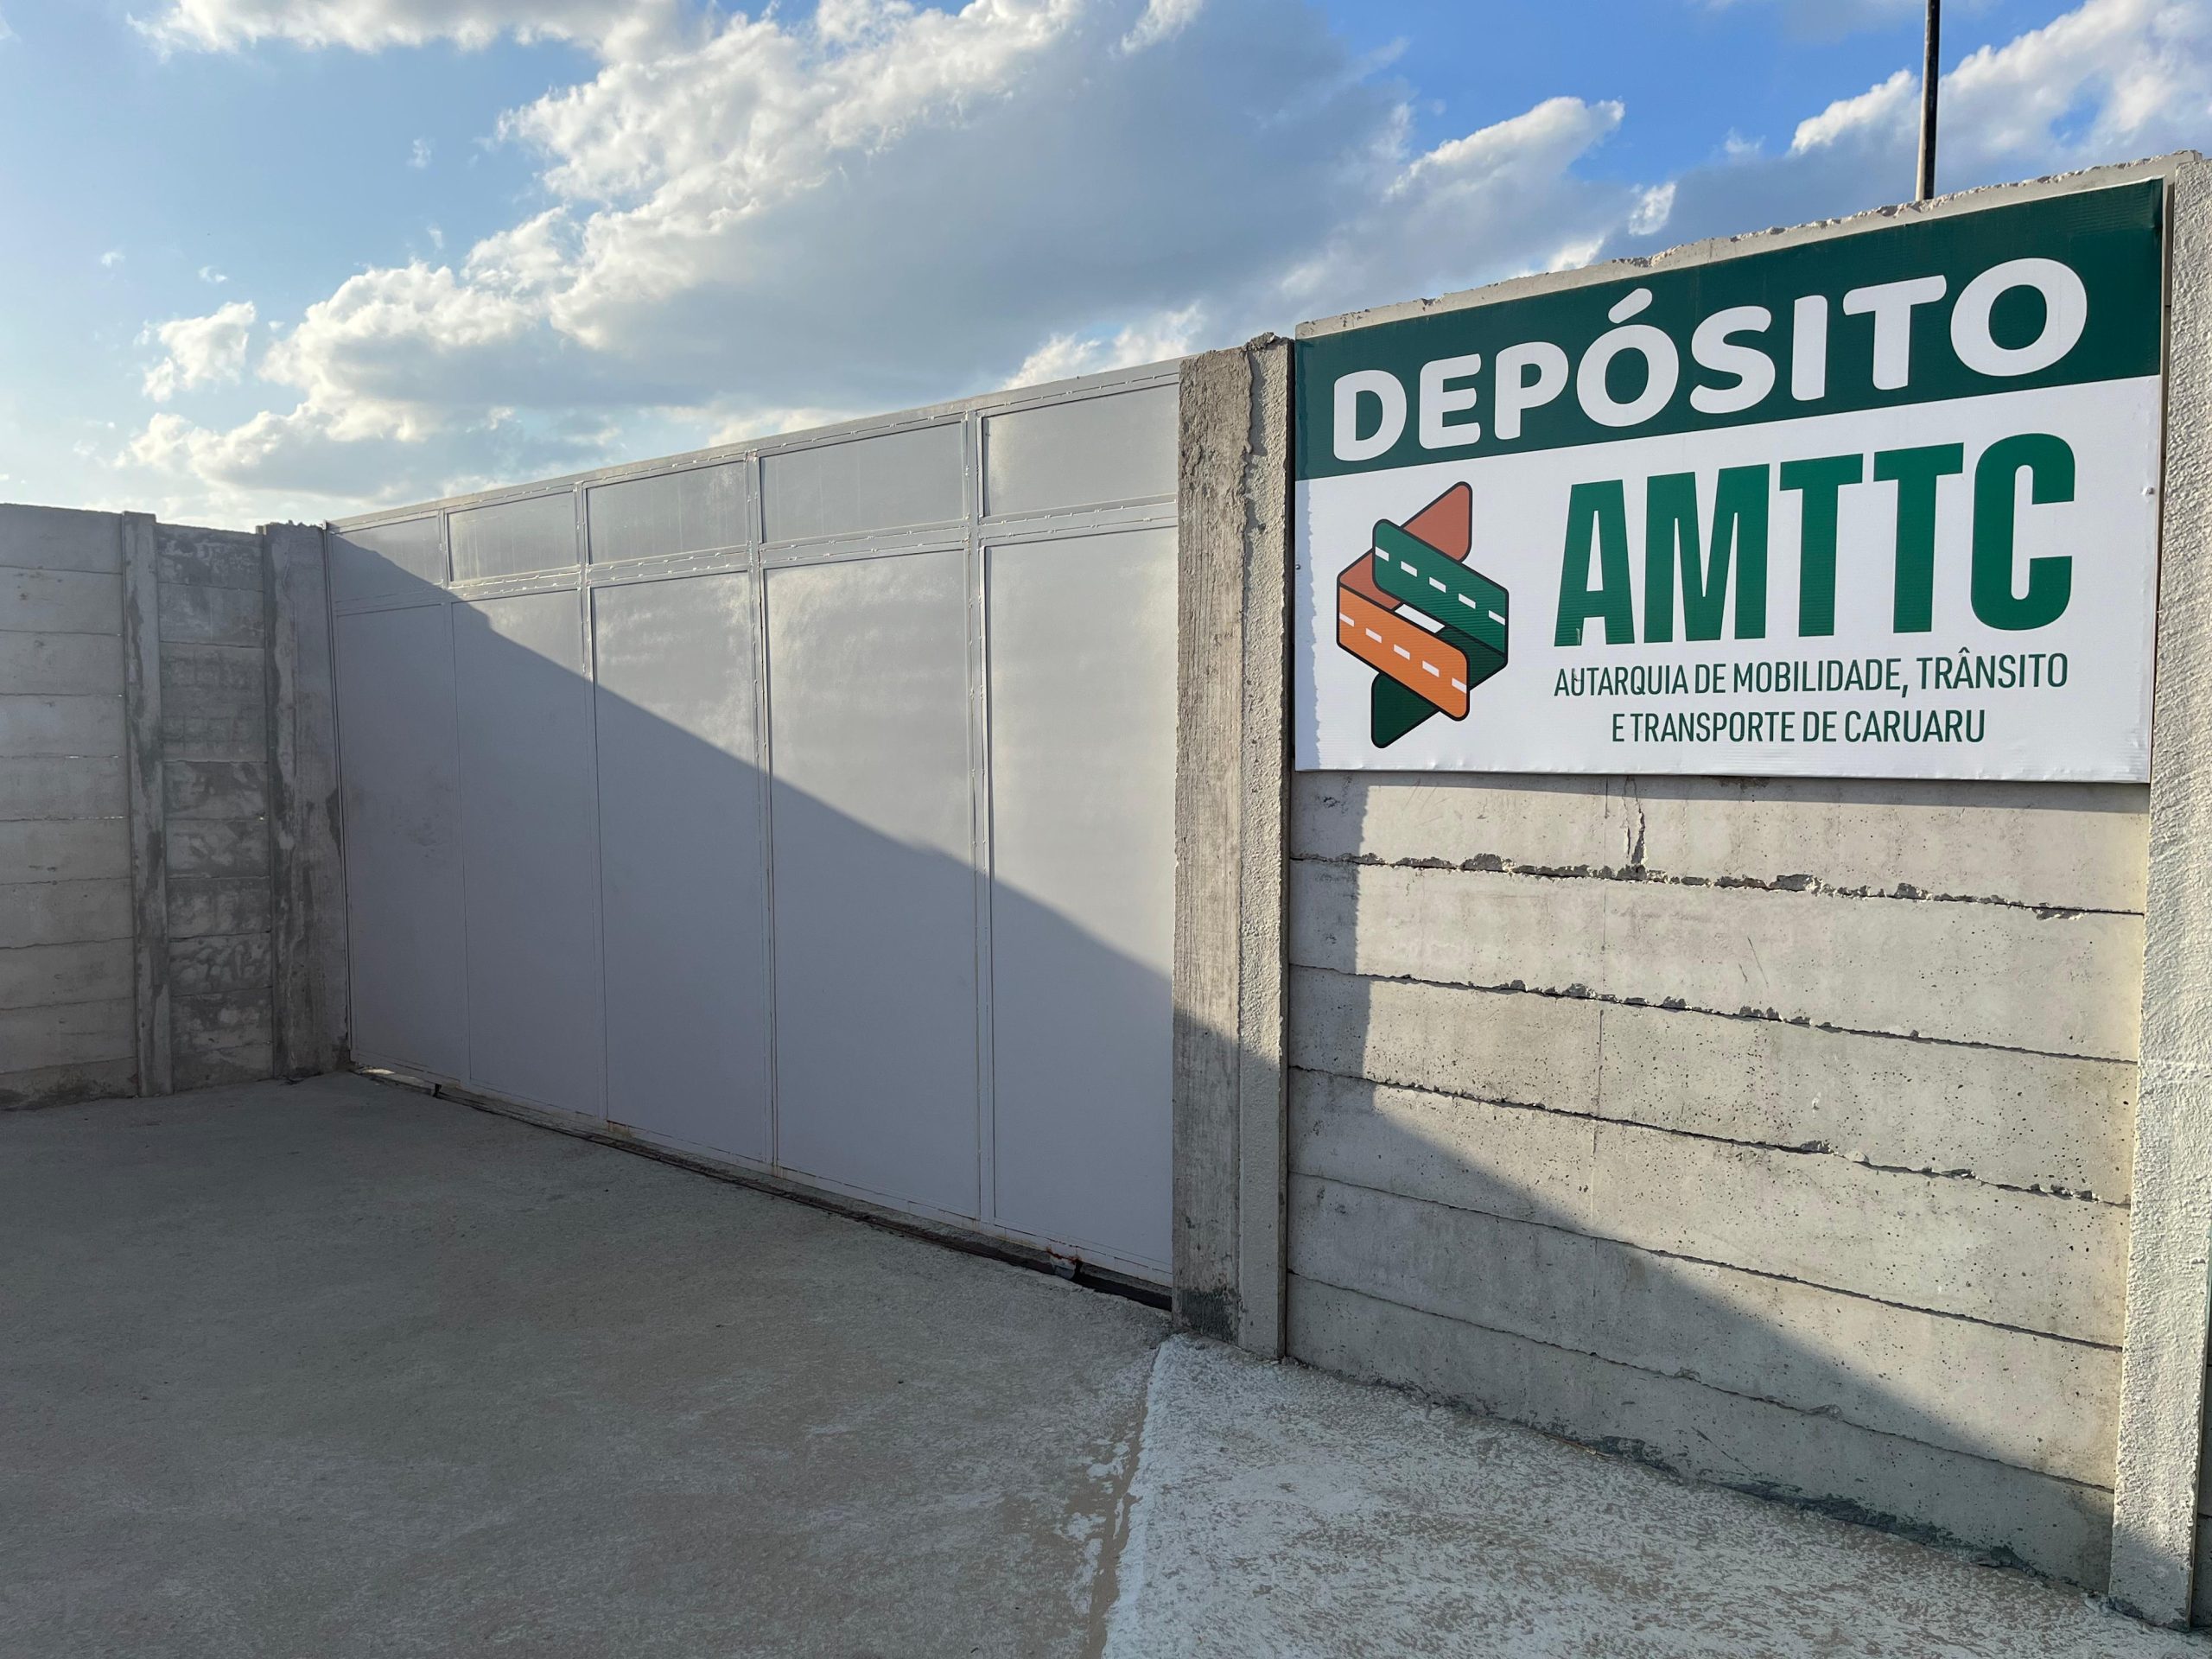 Deposito-AMTTC-scaled.jpg